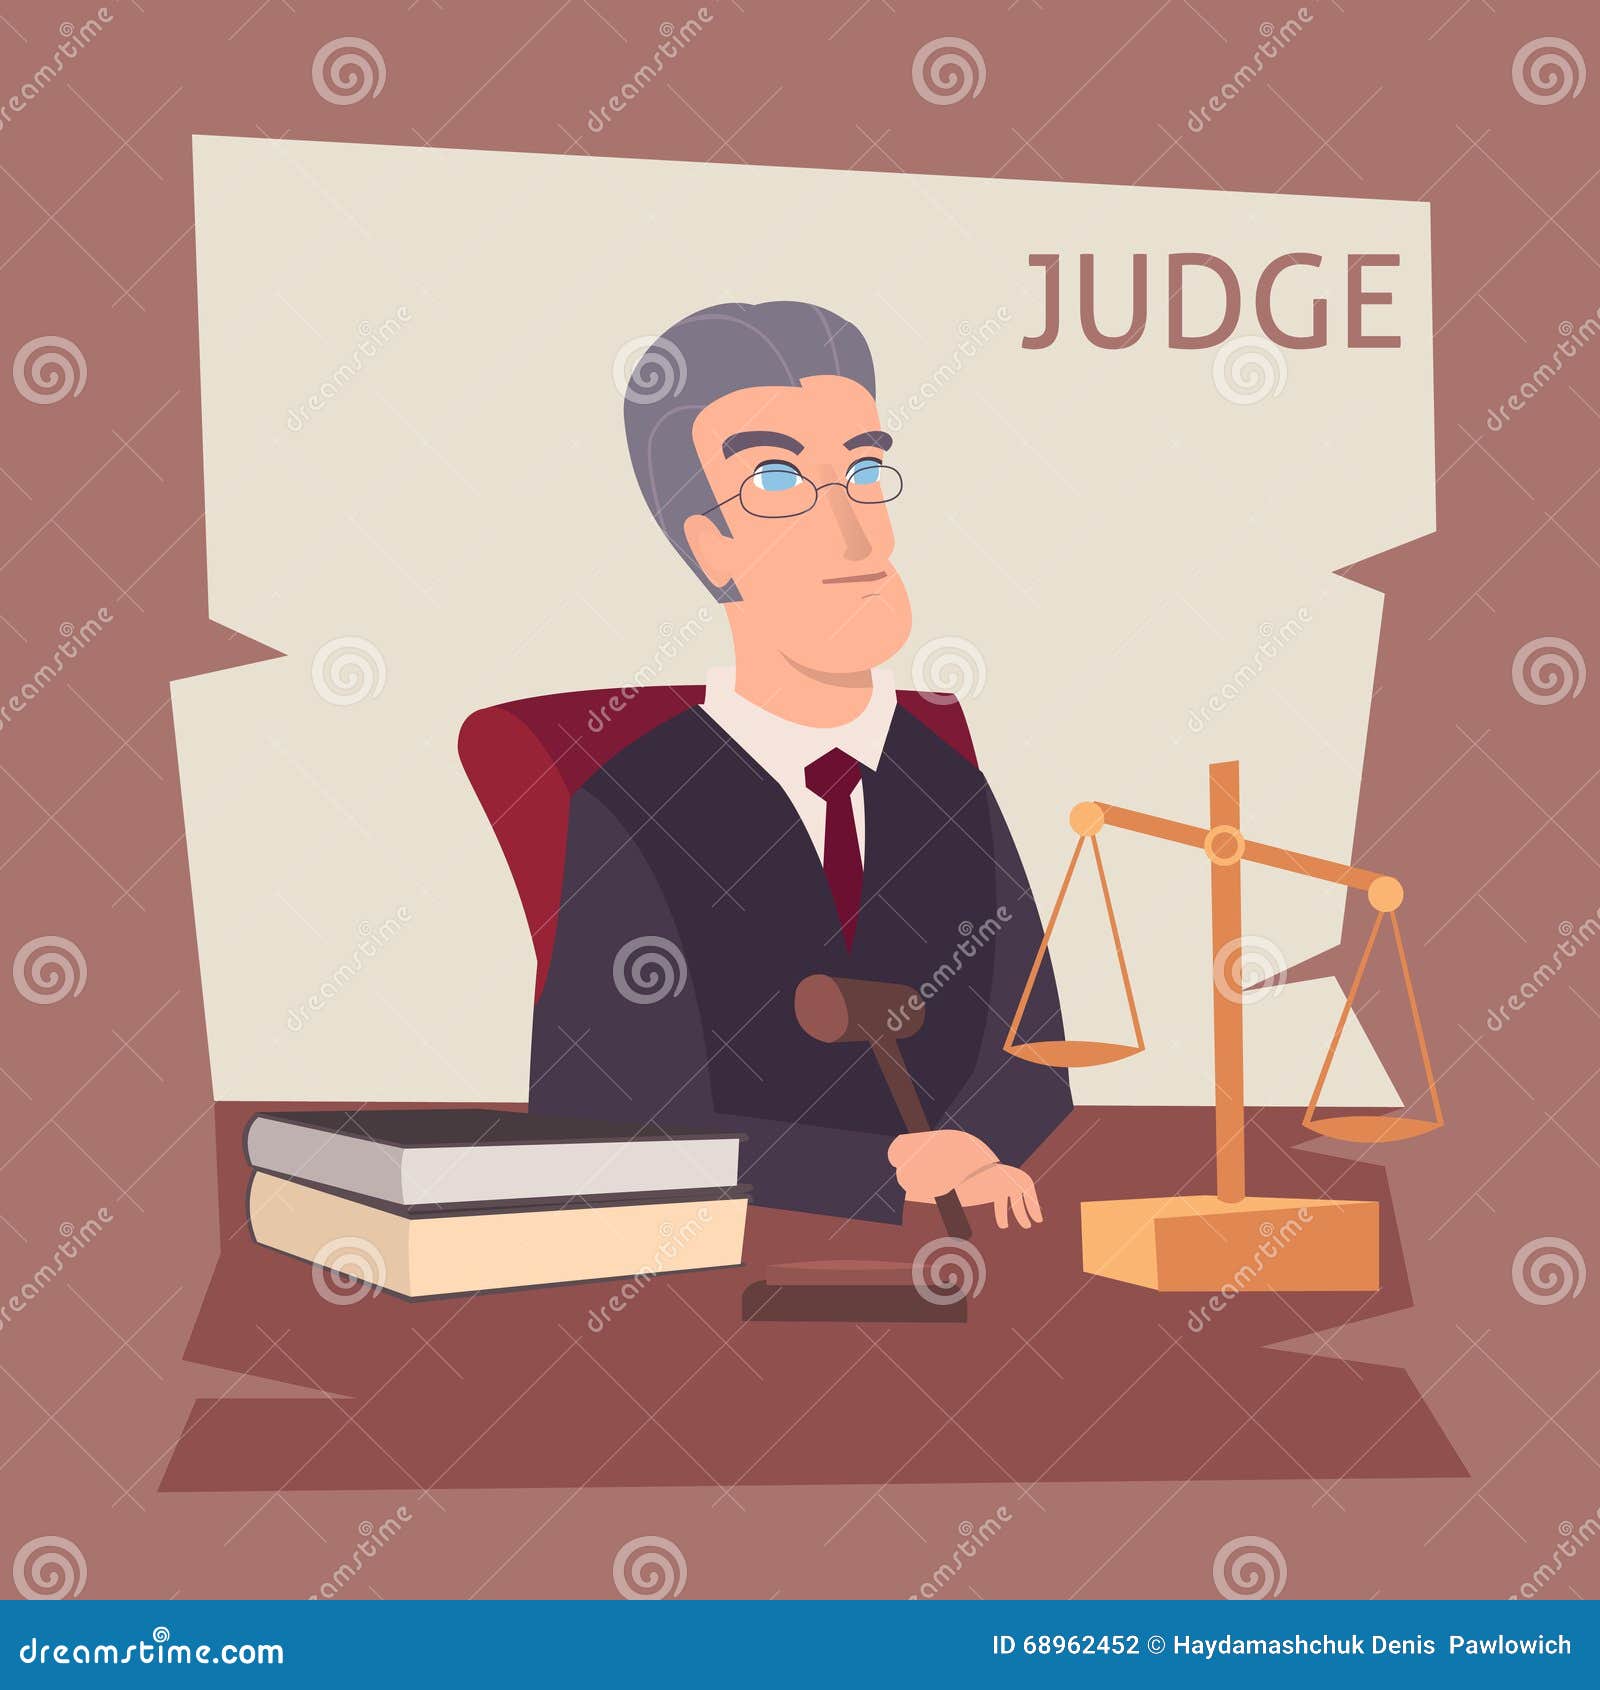 Judge cartoon illustration stock vector. Illustration of decision